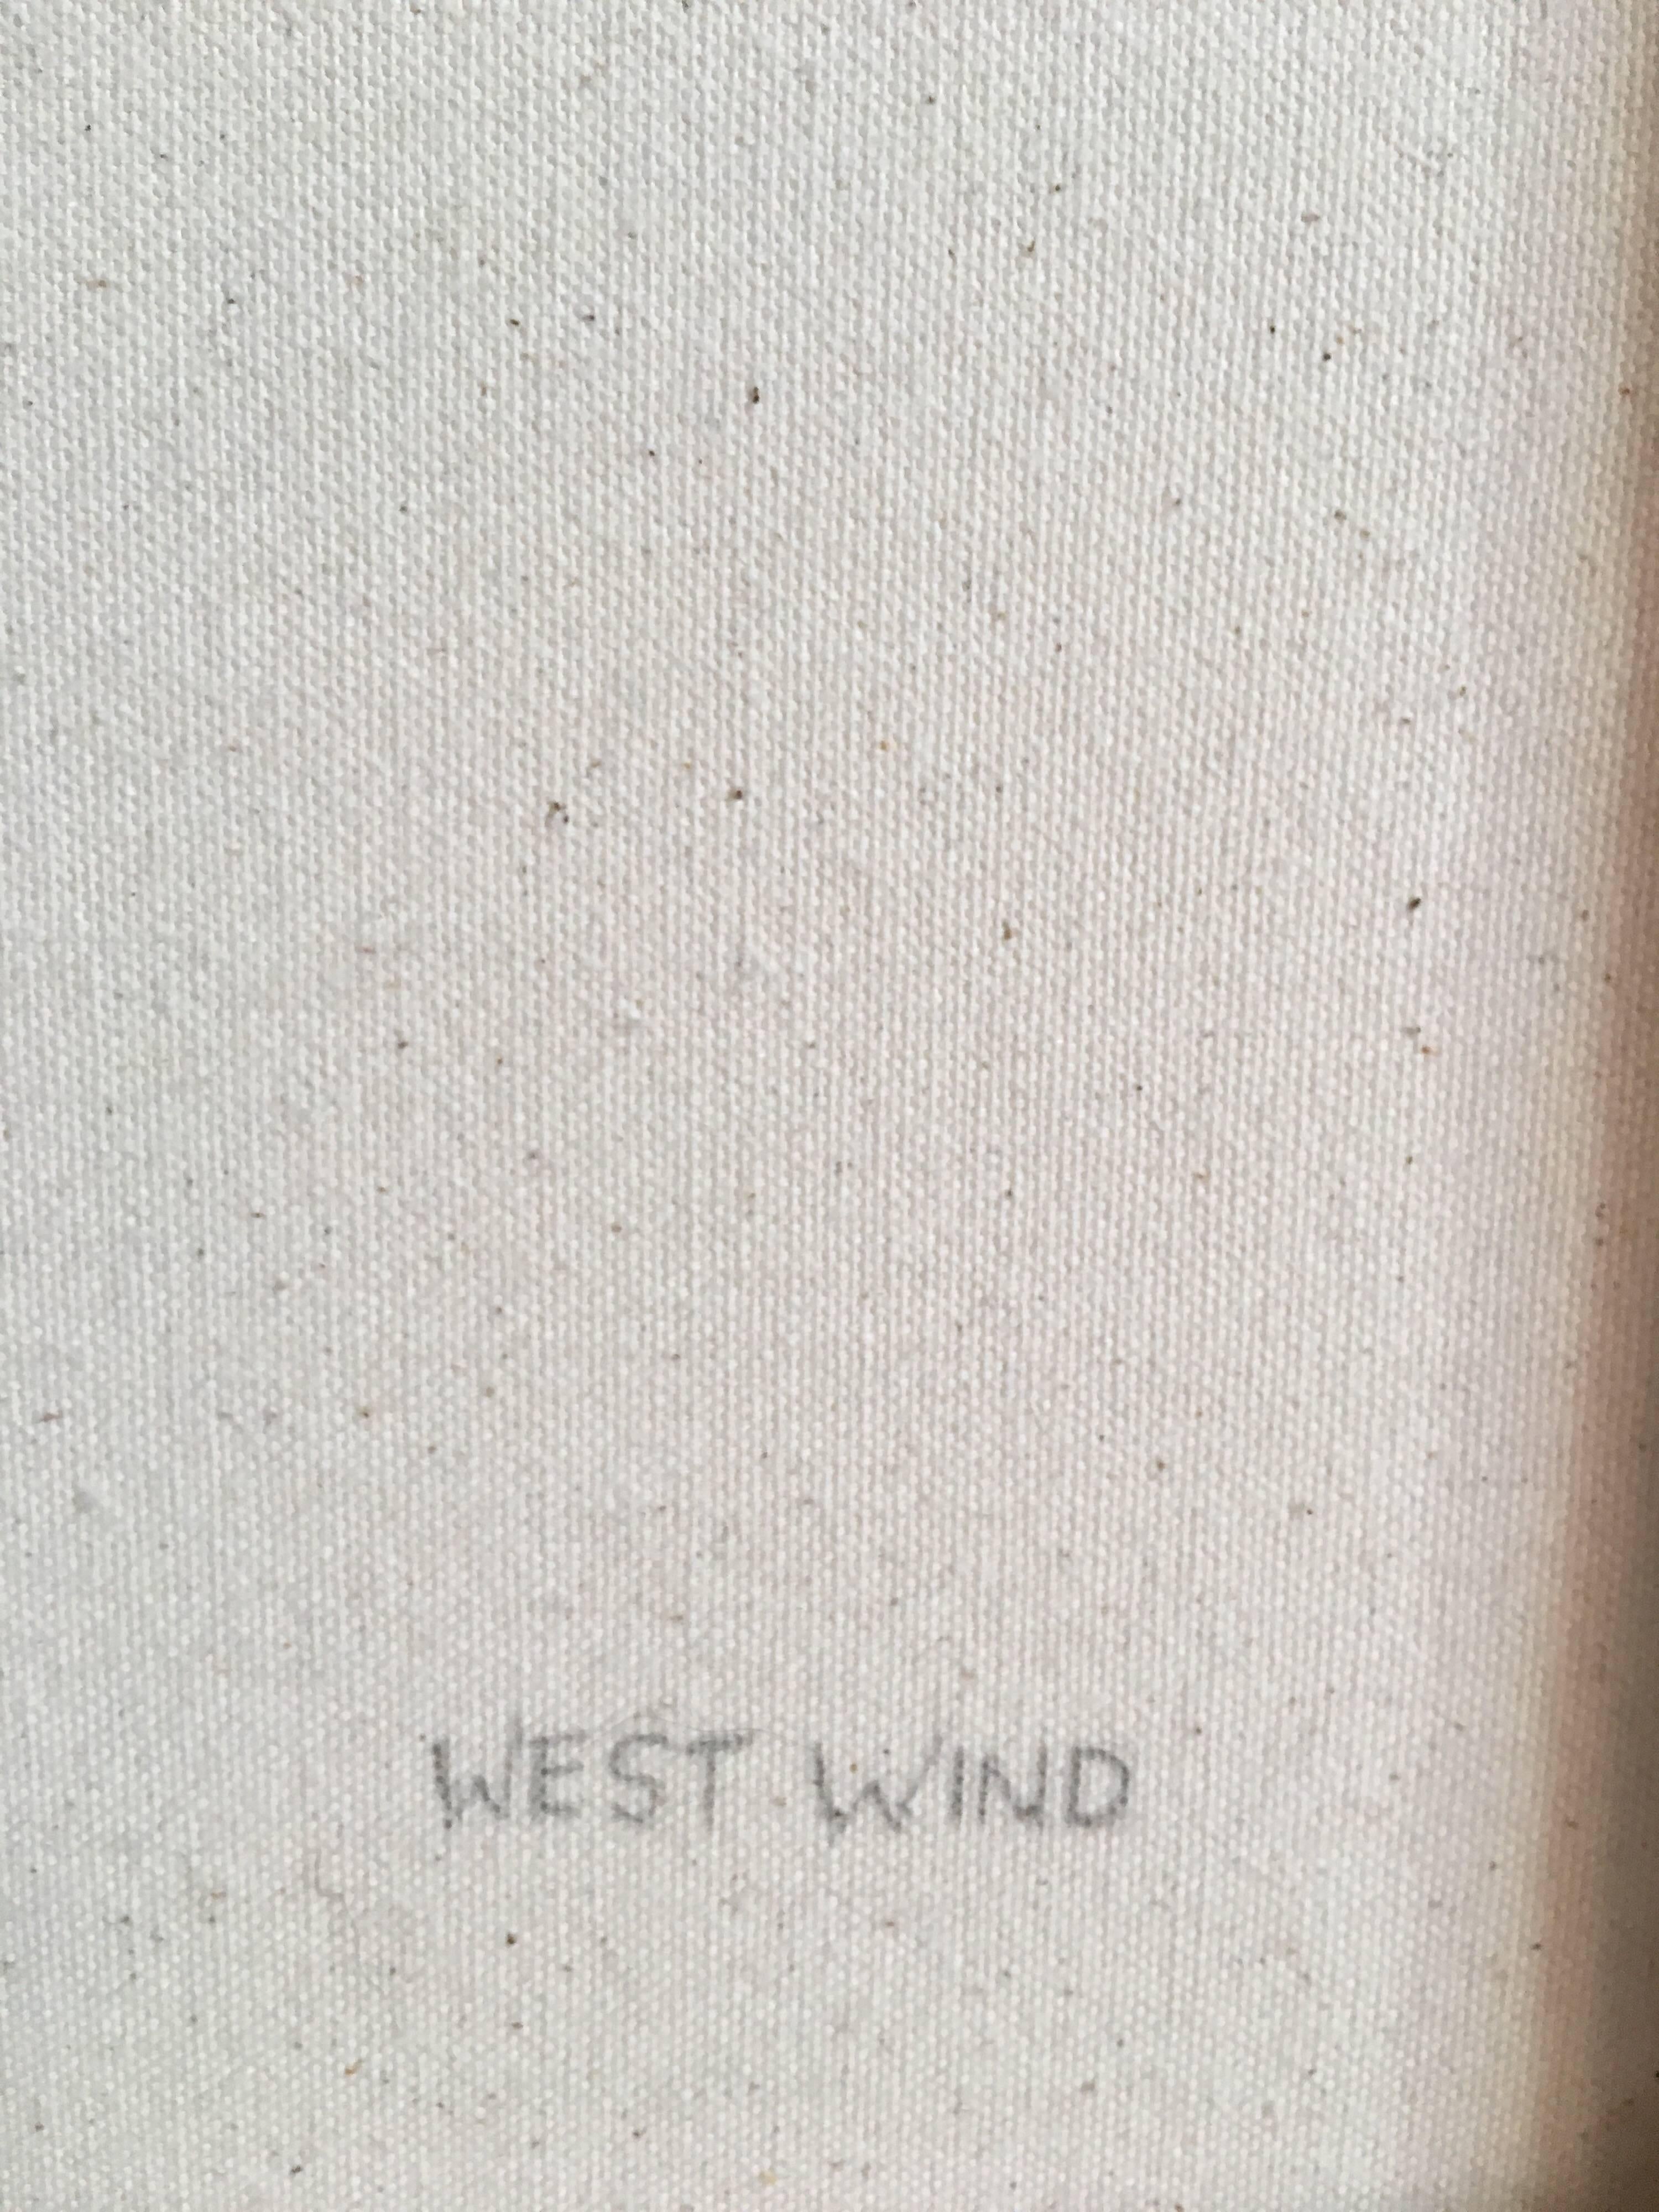 west wind landscape